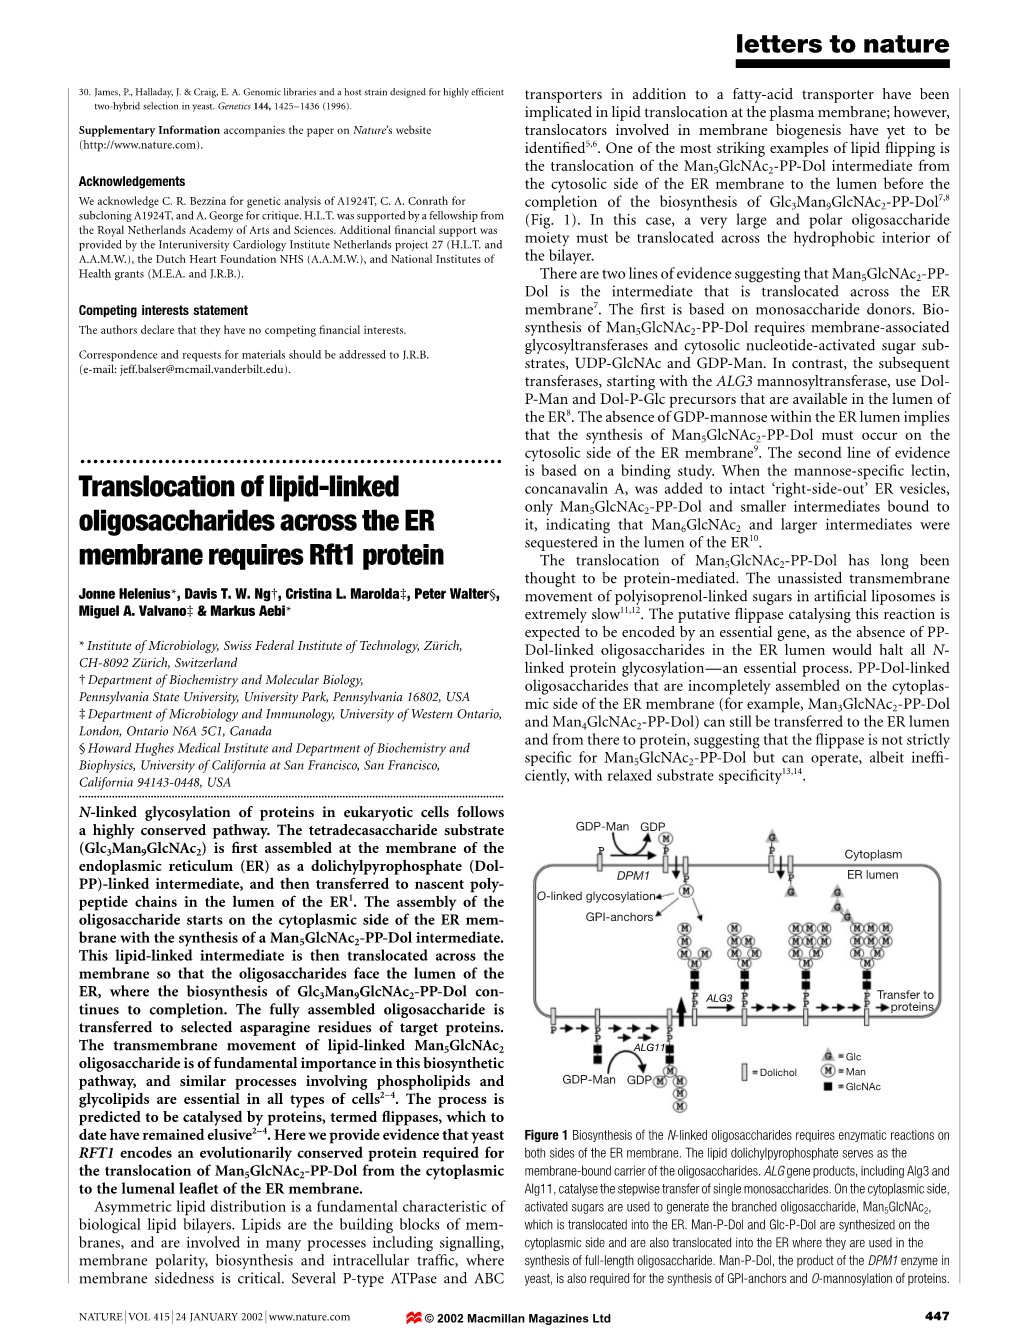 Translocation of Lipid-Linked Oligosaccharides Across the ER